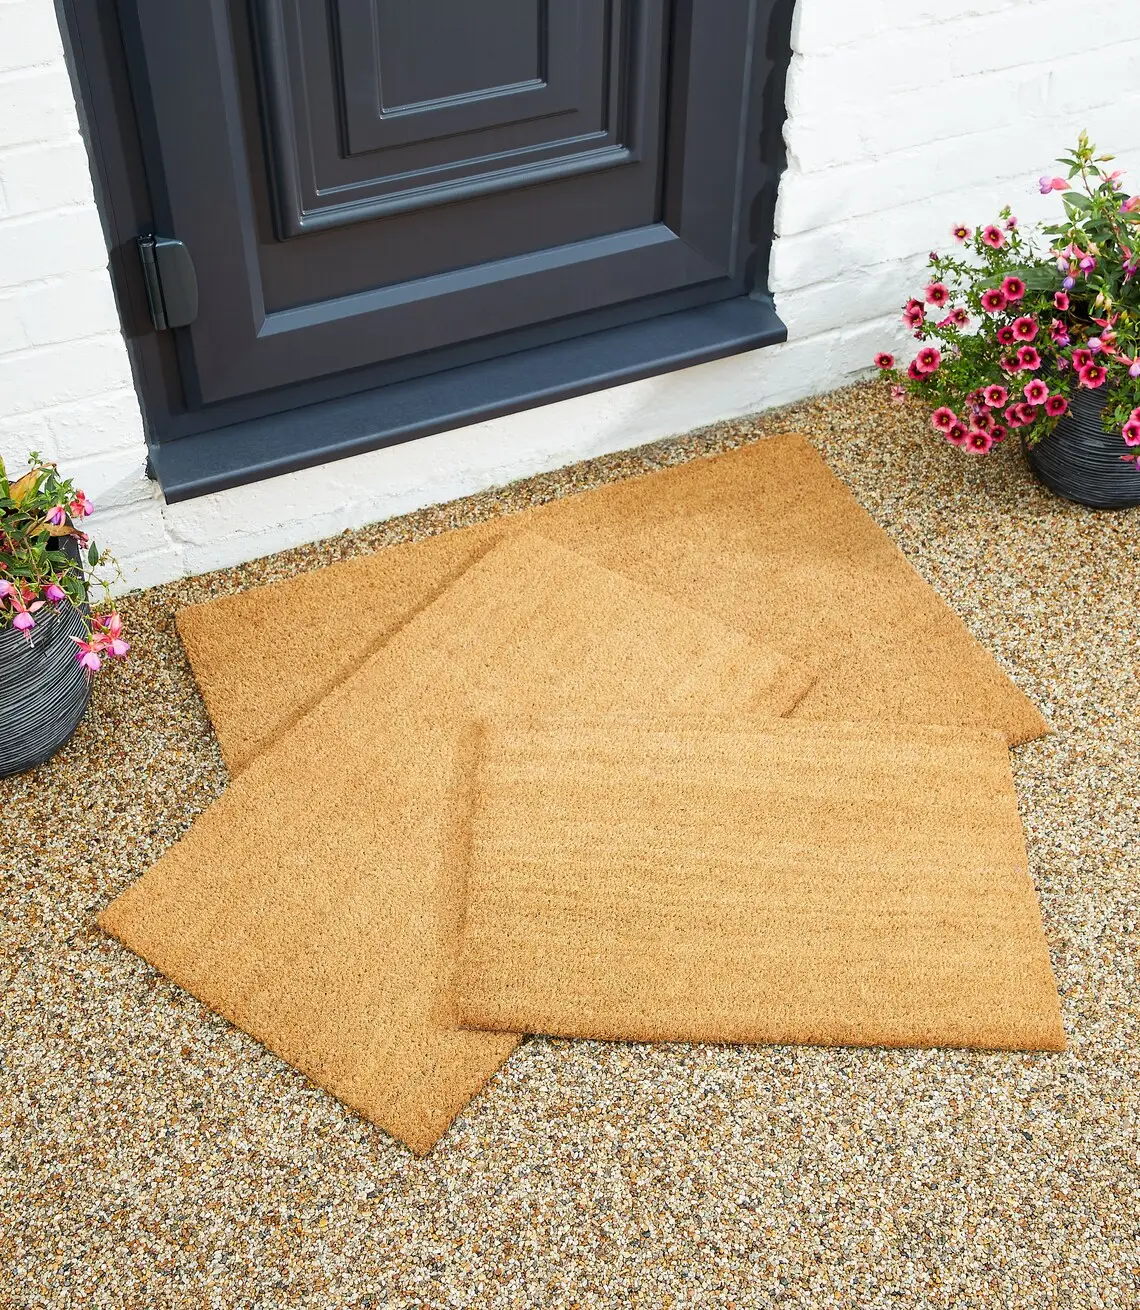 Bulk Wholesale Coconut Fiber Outdoor Tan Brown Plain Blank Coco Coir Doormats